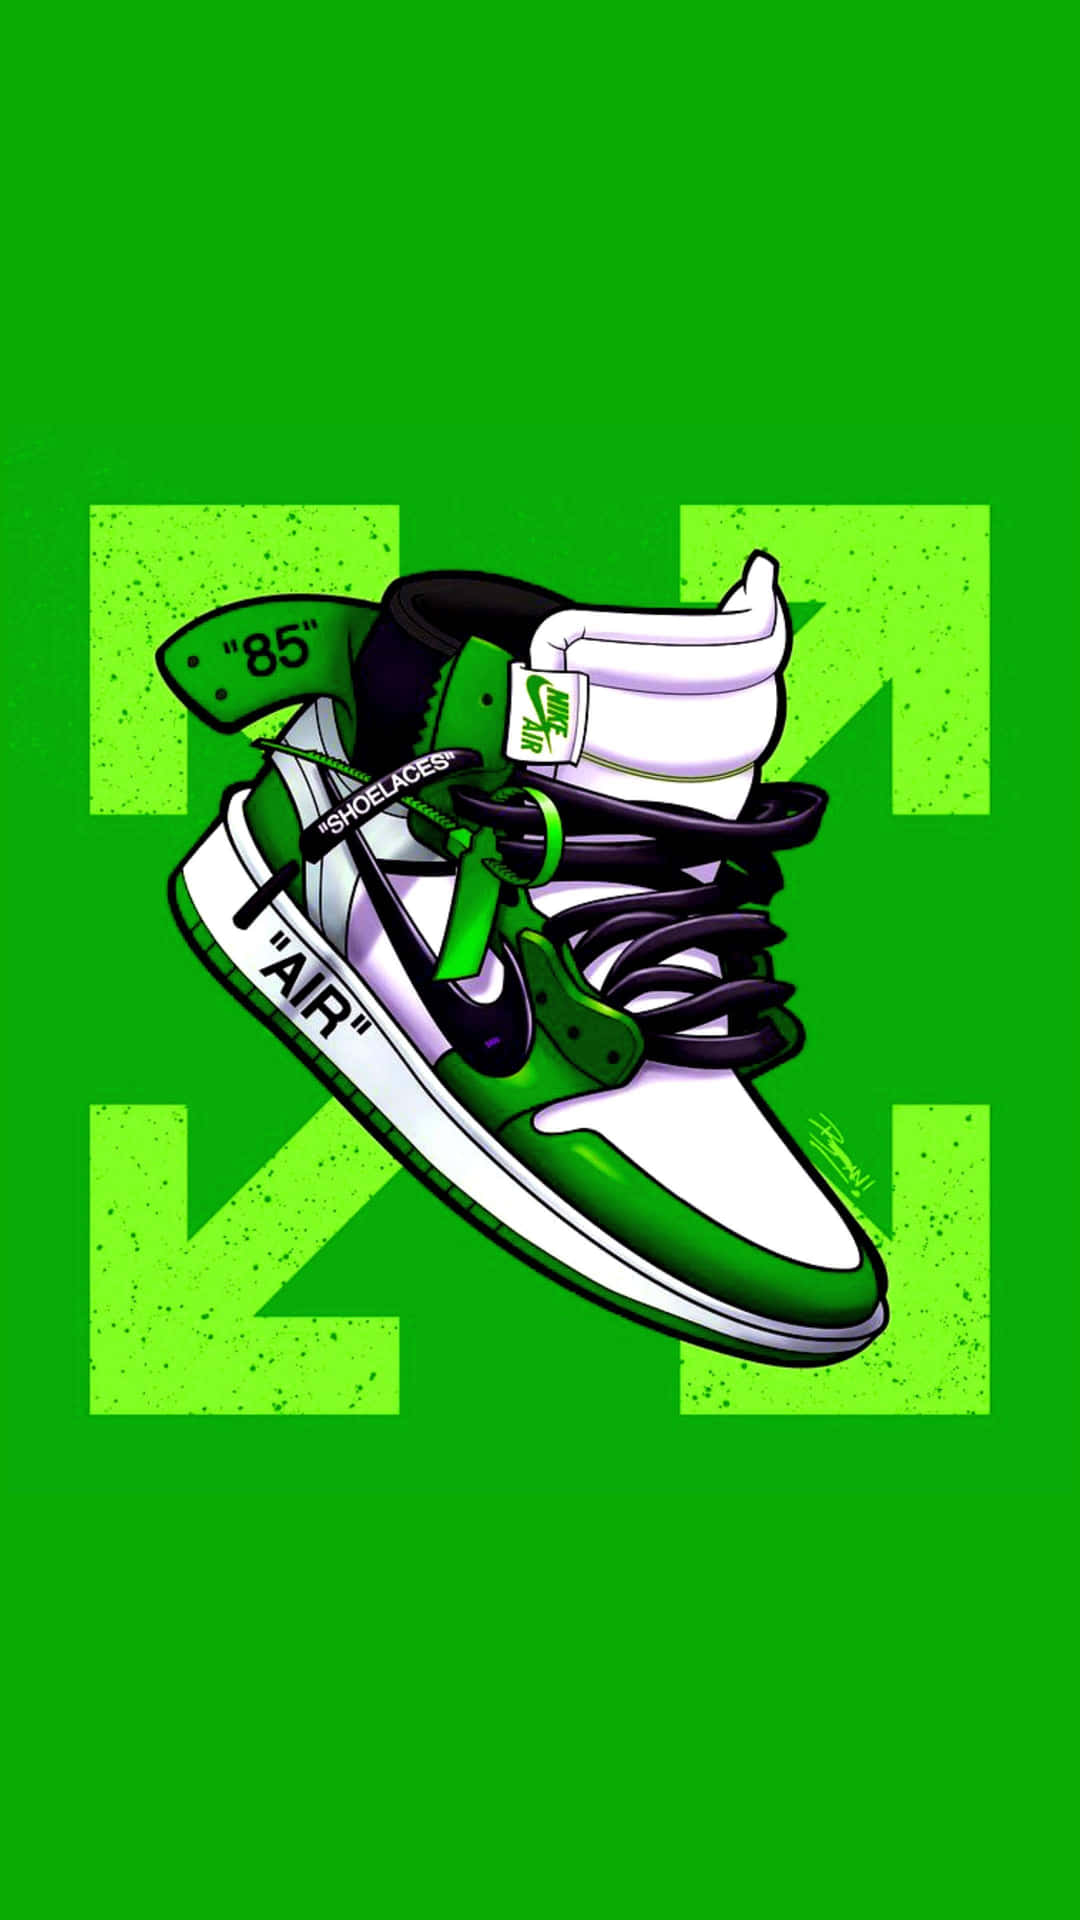 En grøn og hvid sneaker med et hvidt logo på det. Wallpaper